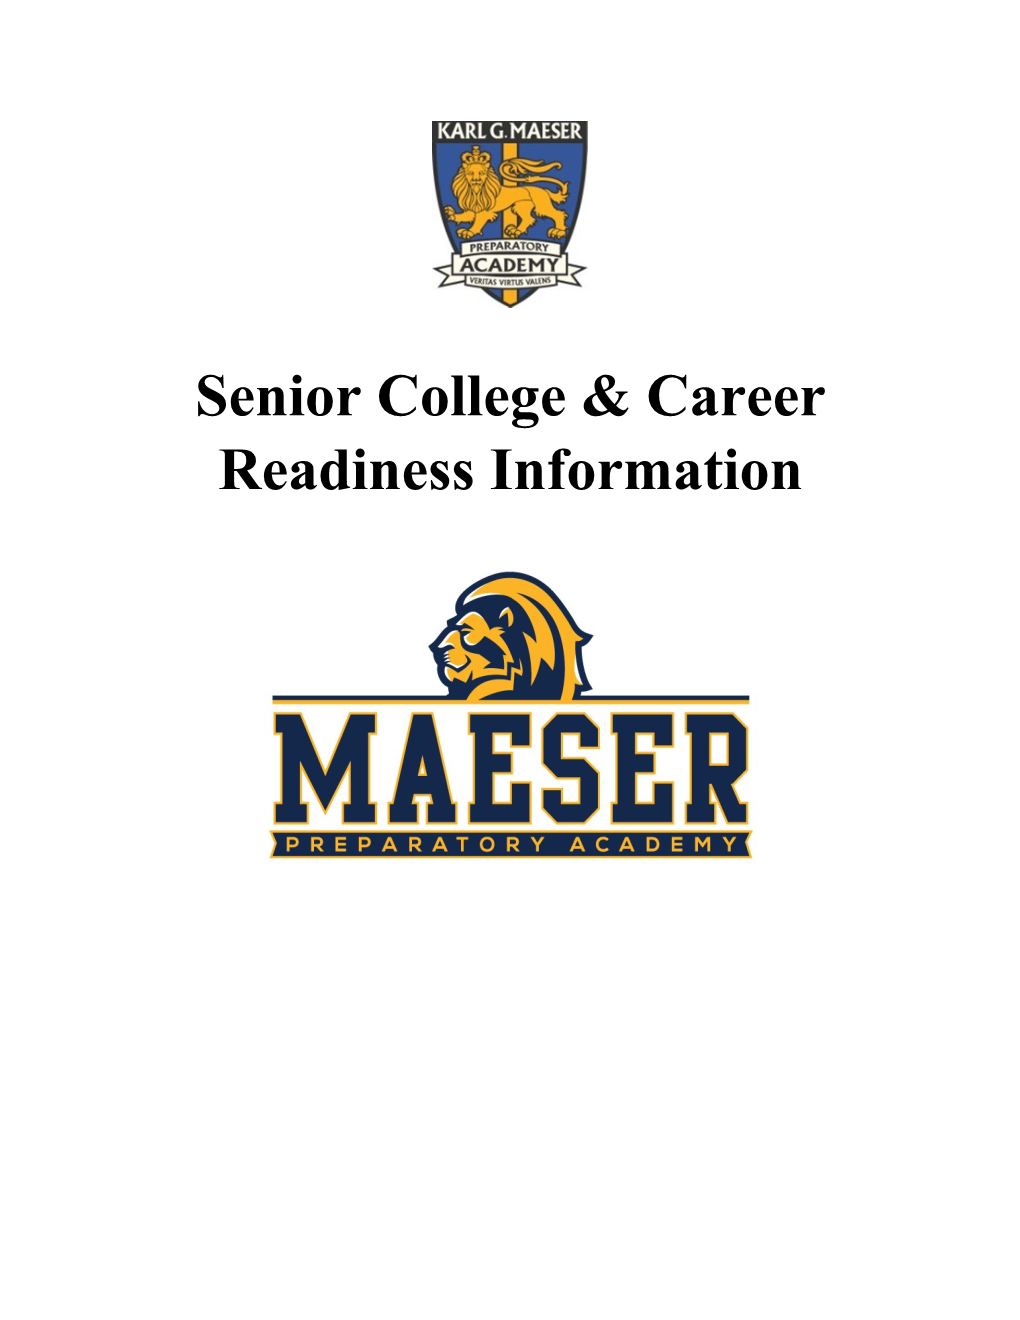 Senior College & Career Readiness Information